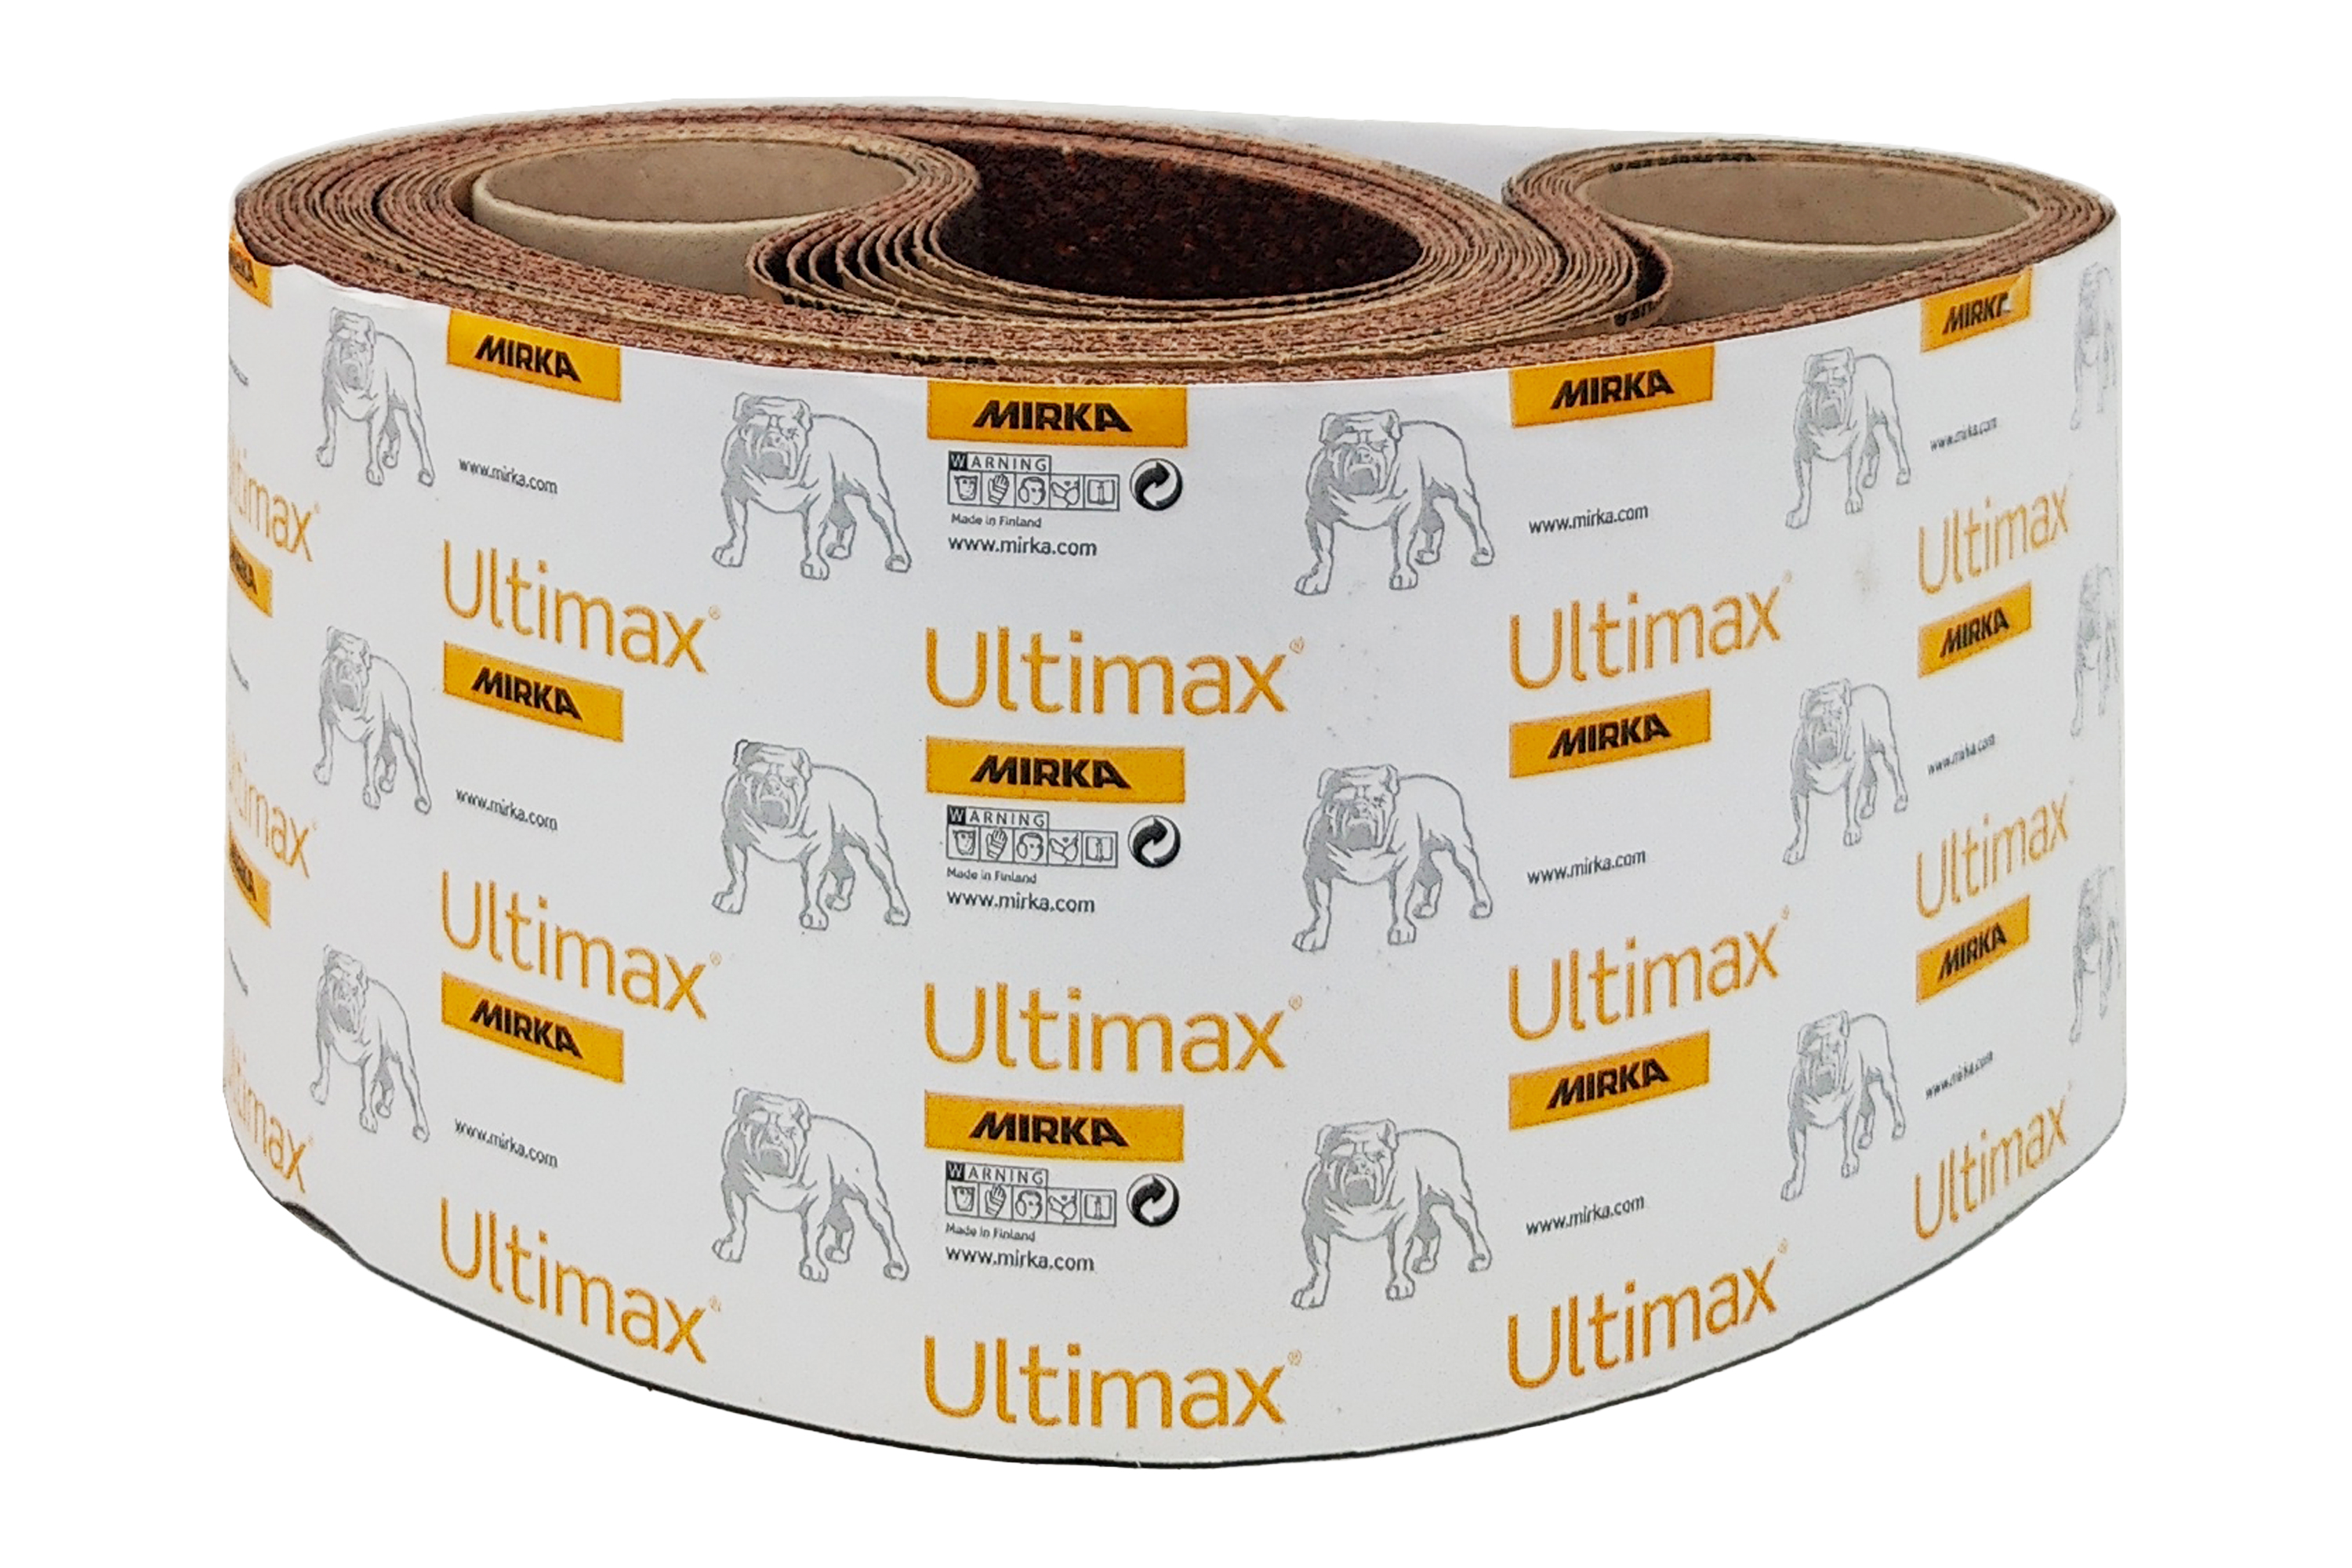 Abbildung Mirka Ultimax 150x2200mm mit Verpackung.